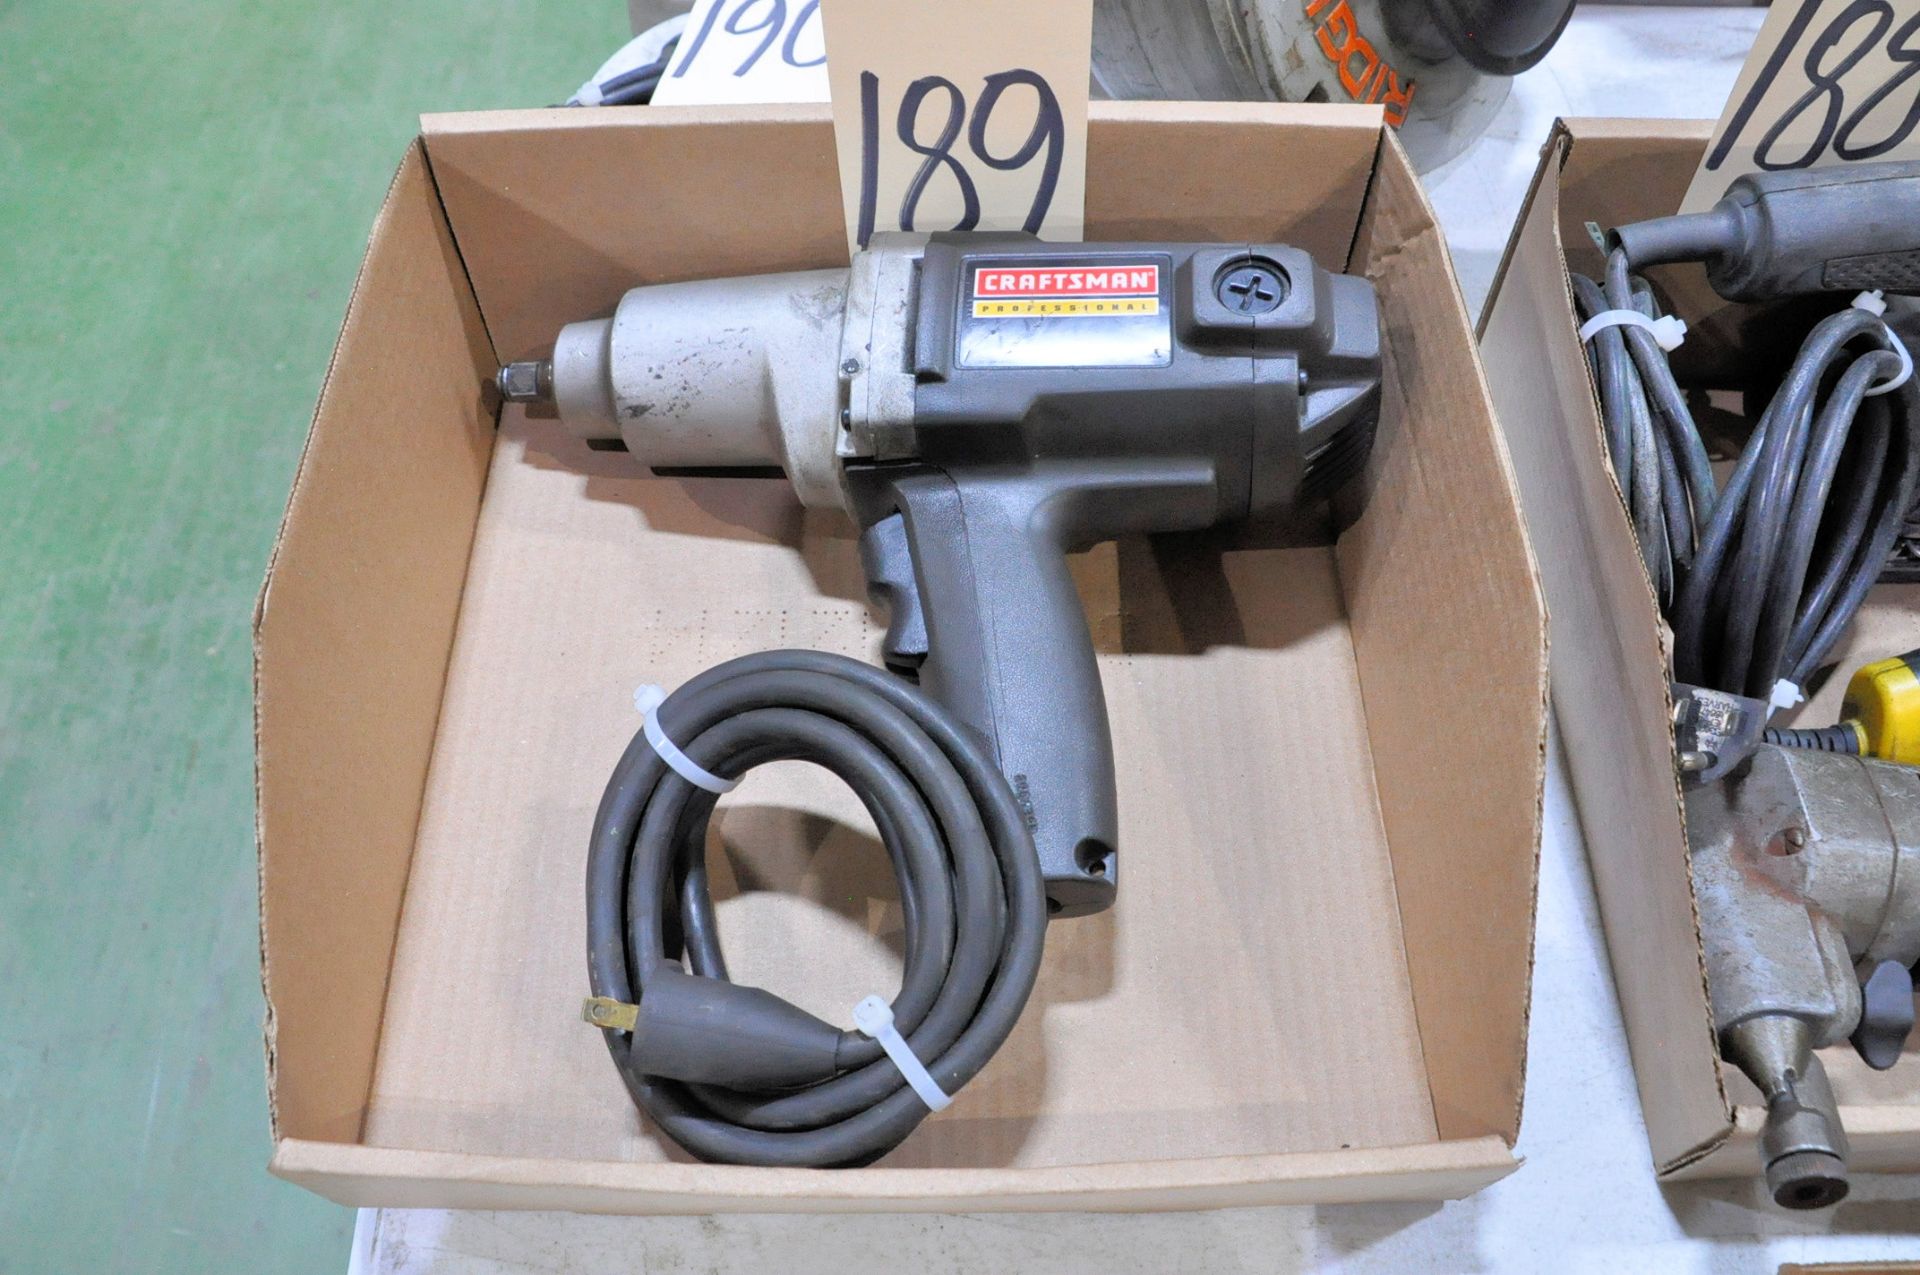 Craftsman 1/2" Electric Impact Gun in (1) Box, (E-3)